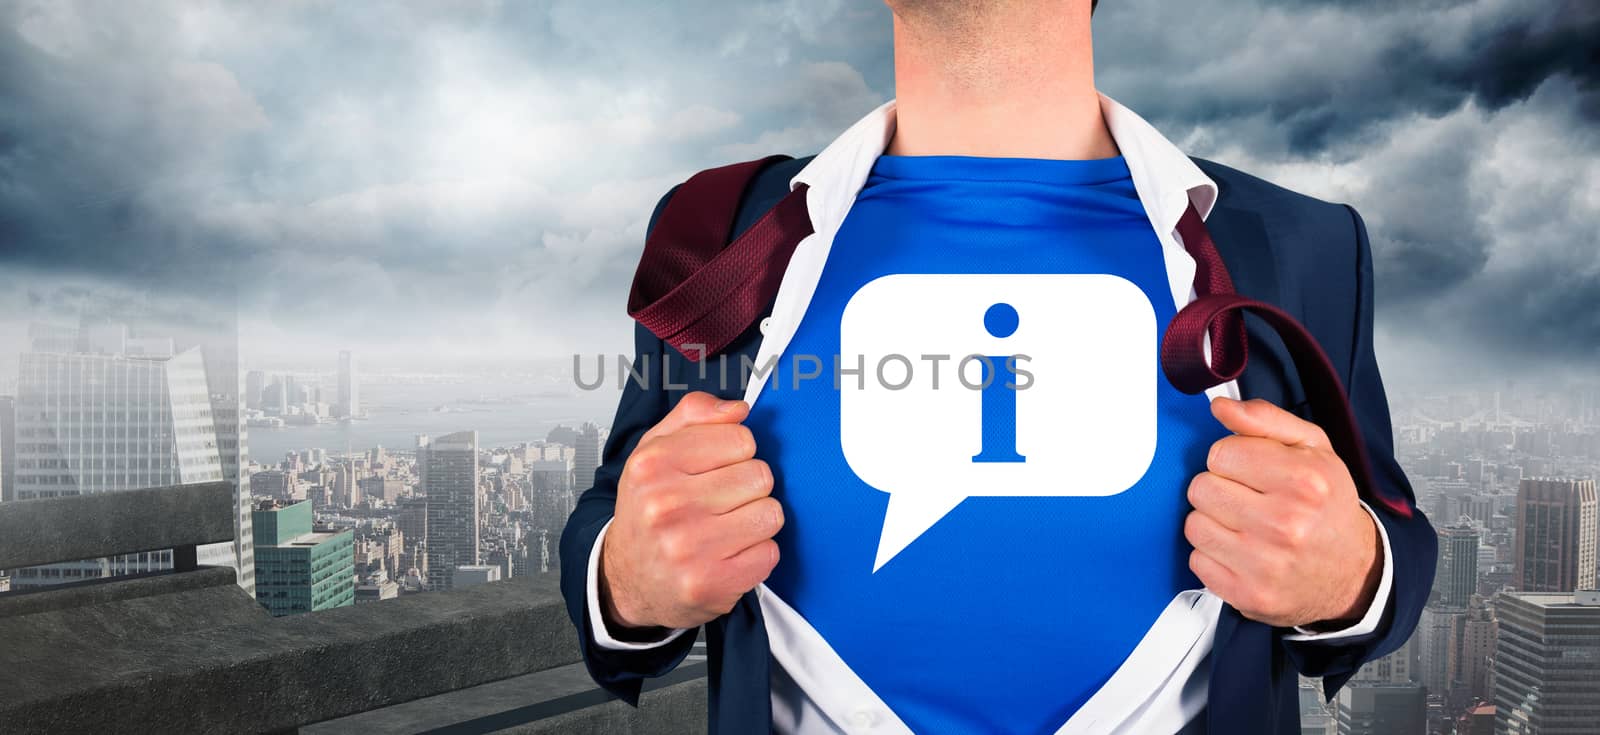 Composite image of businessman opening his shirt superhero style by Wavebreakmedia